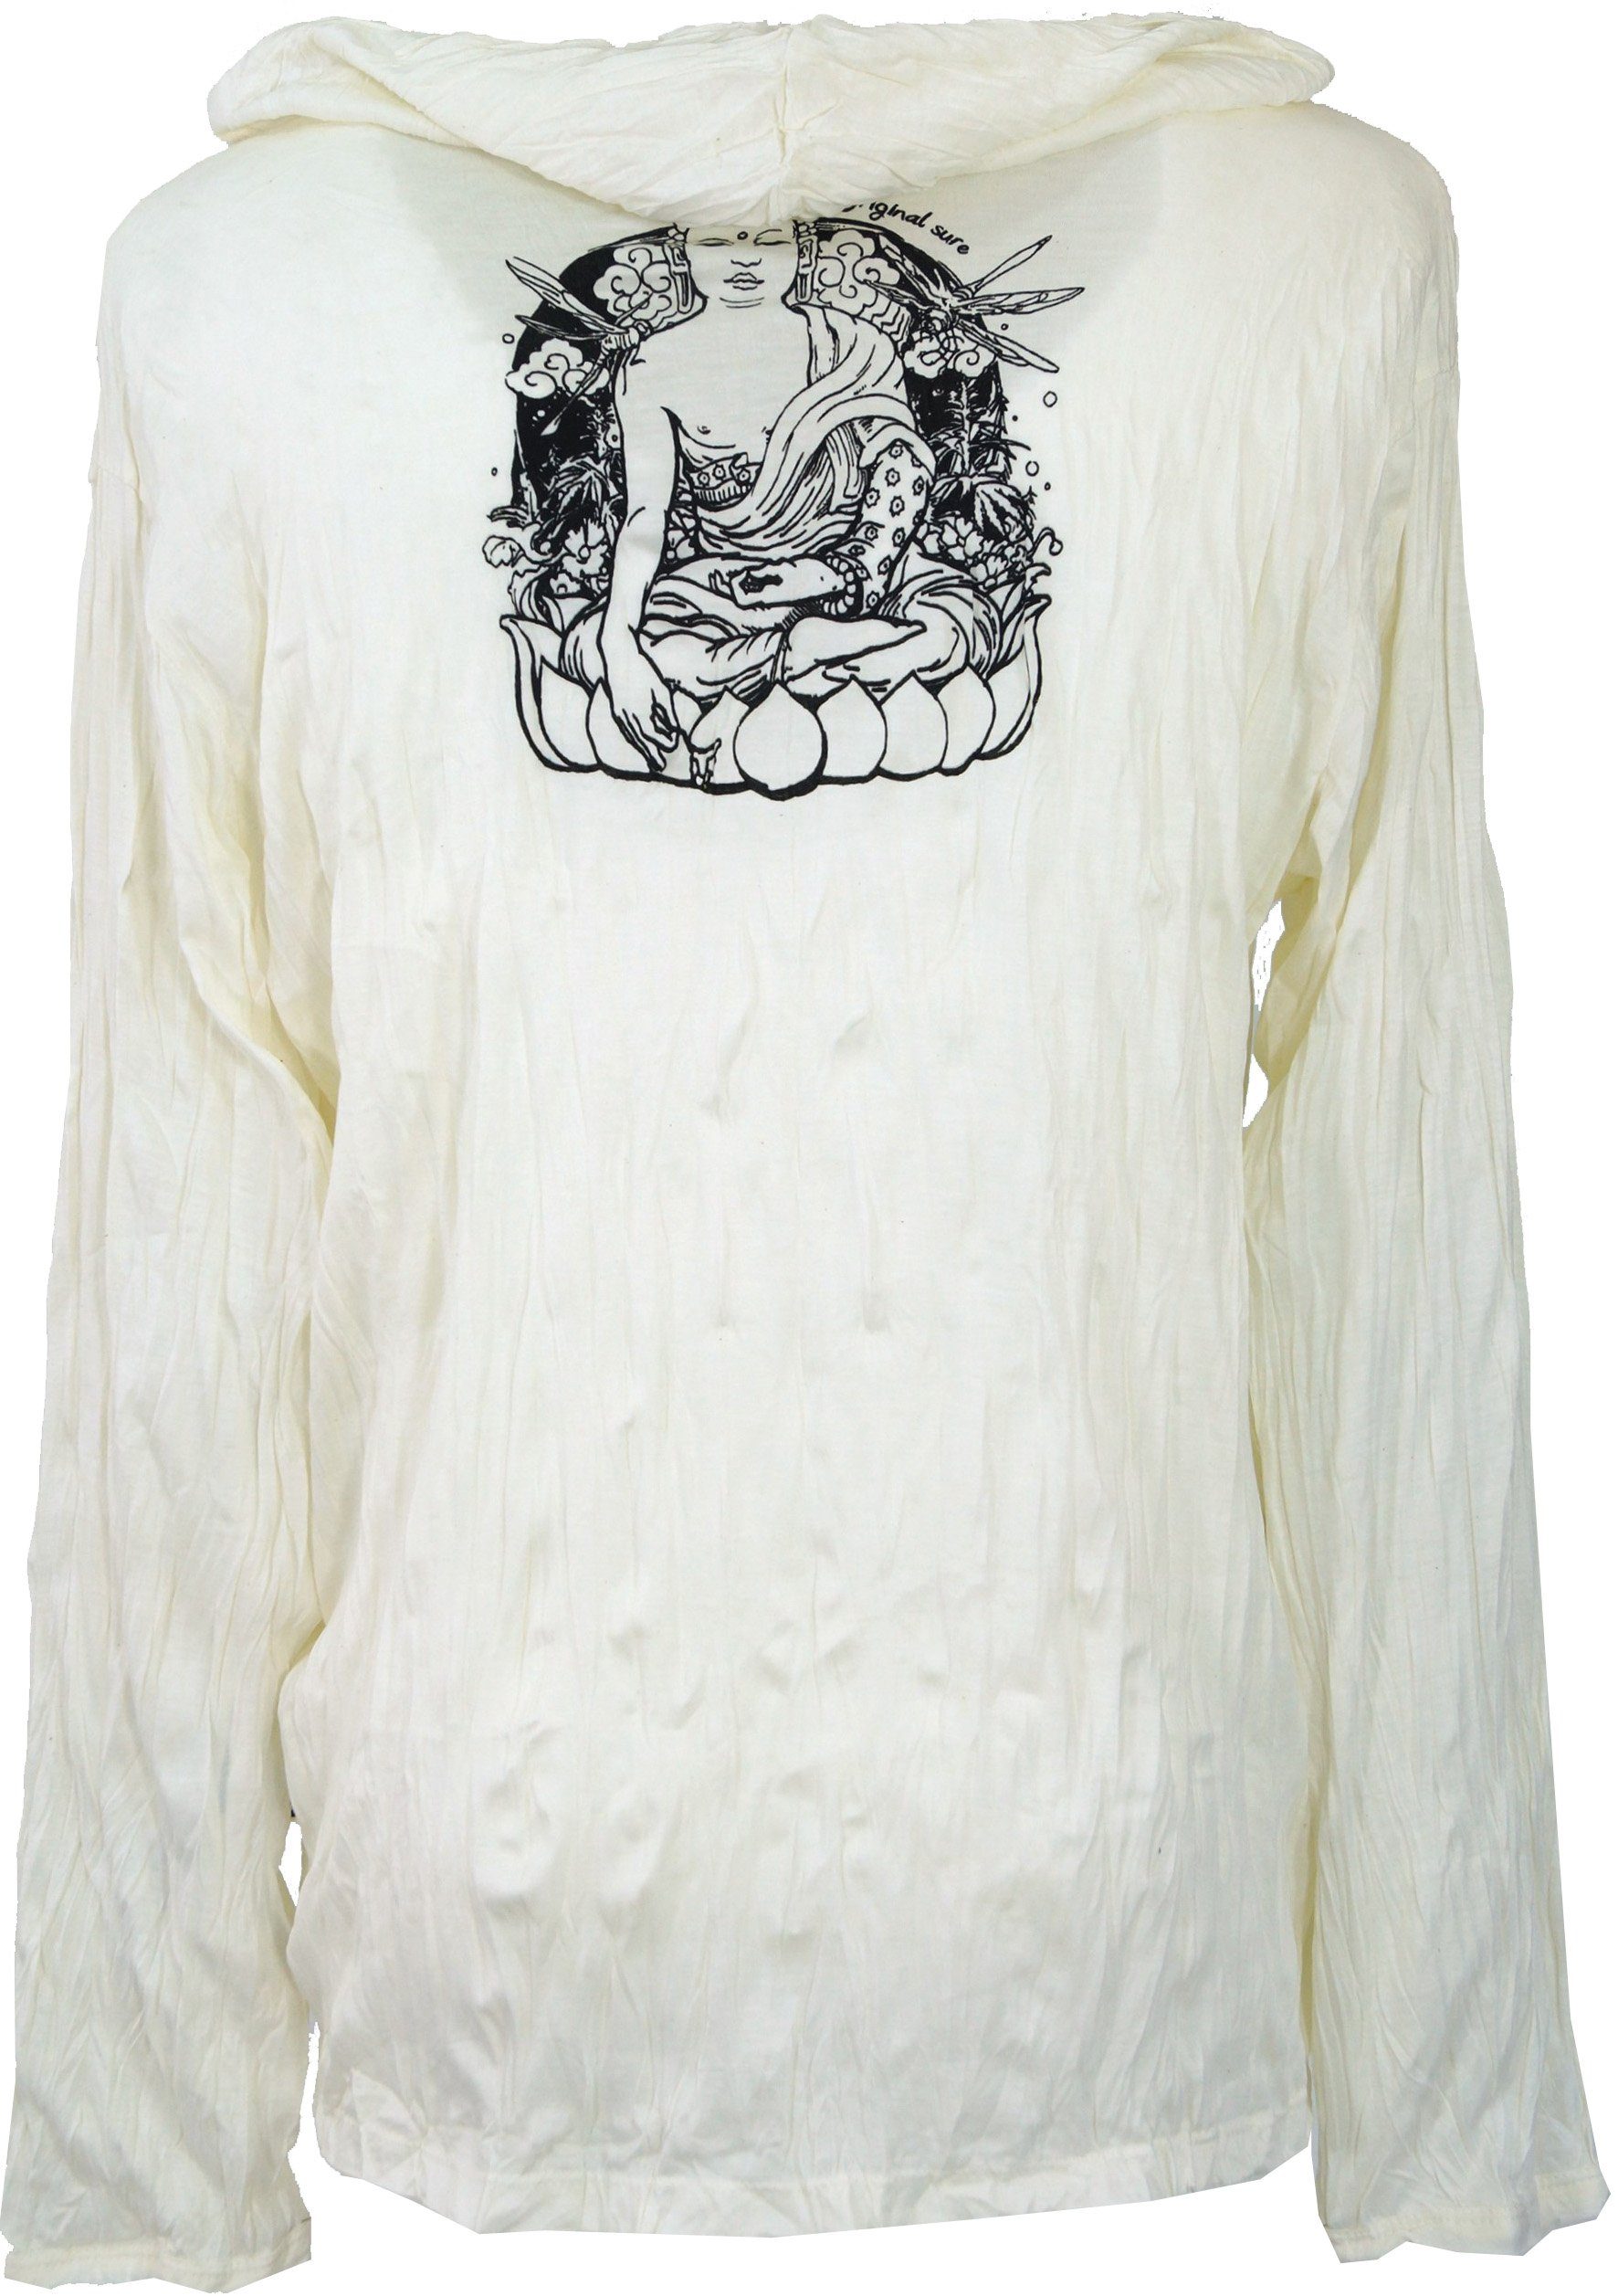 Guru-Shop T-Shirt Sure Langarmshirt, Kapuzenshirt Meditation.. alternative Goa weiß Festival, Style, Bekleidung